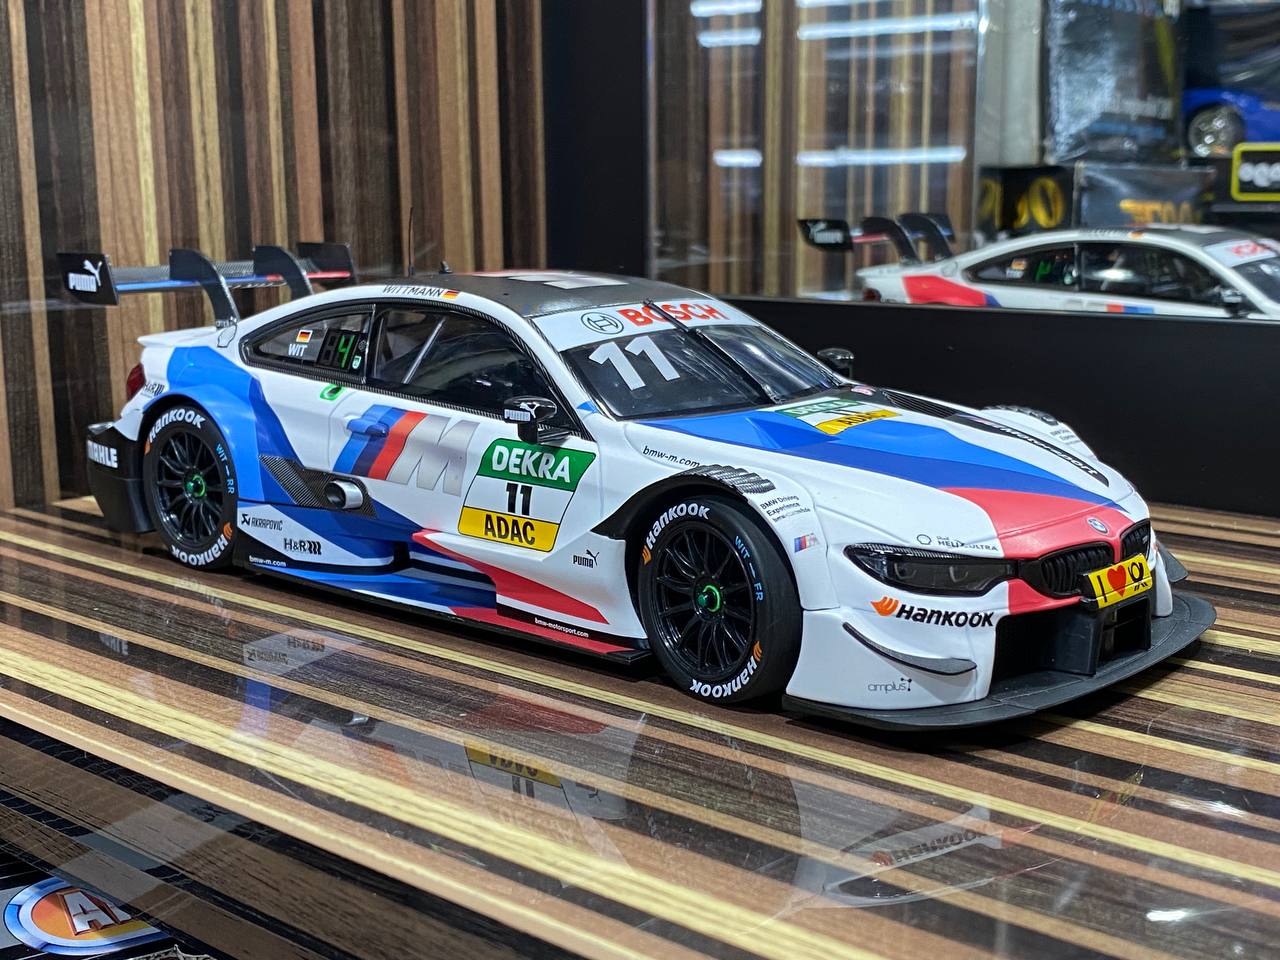 BMW M4 DTM 2018